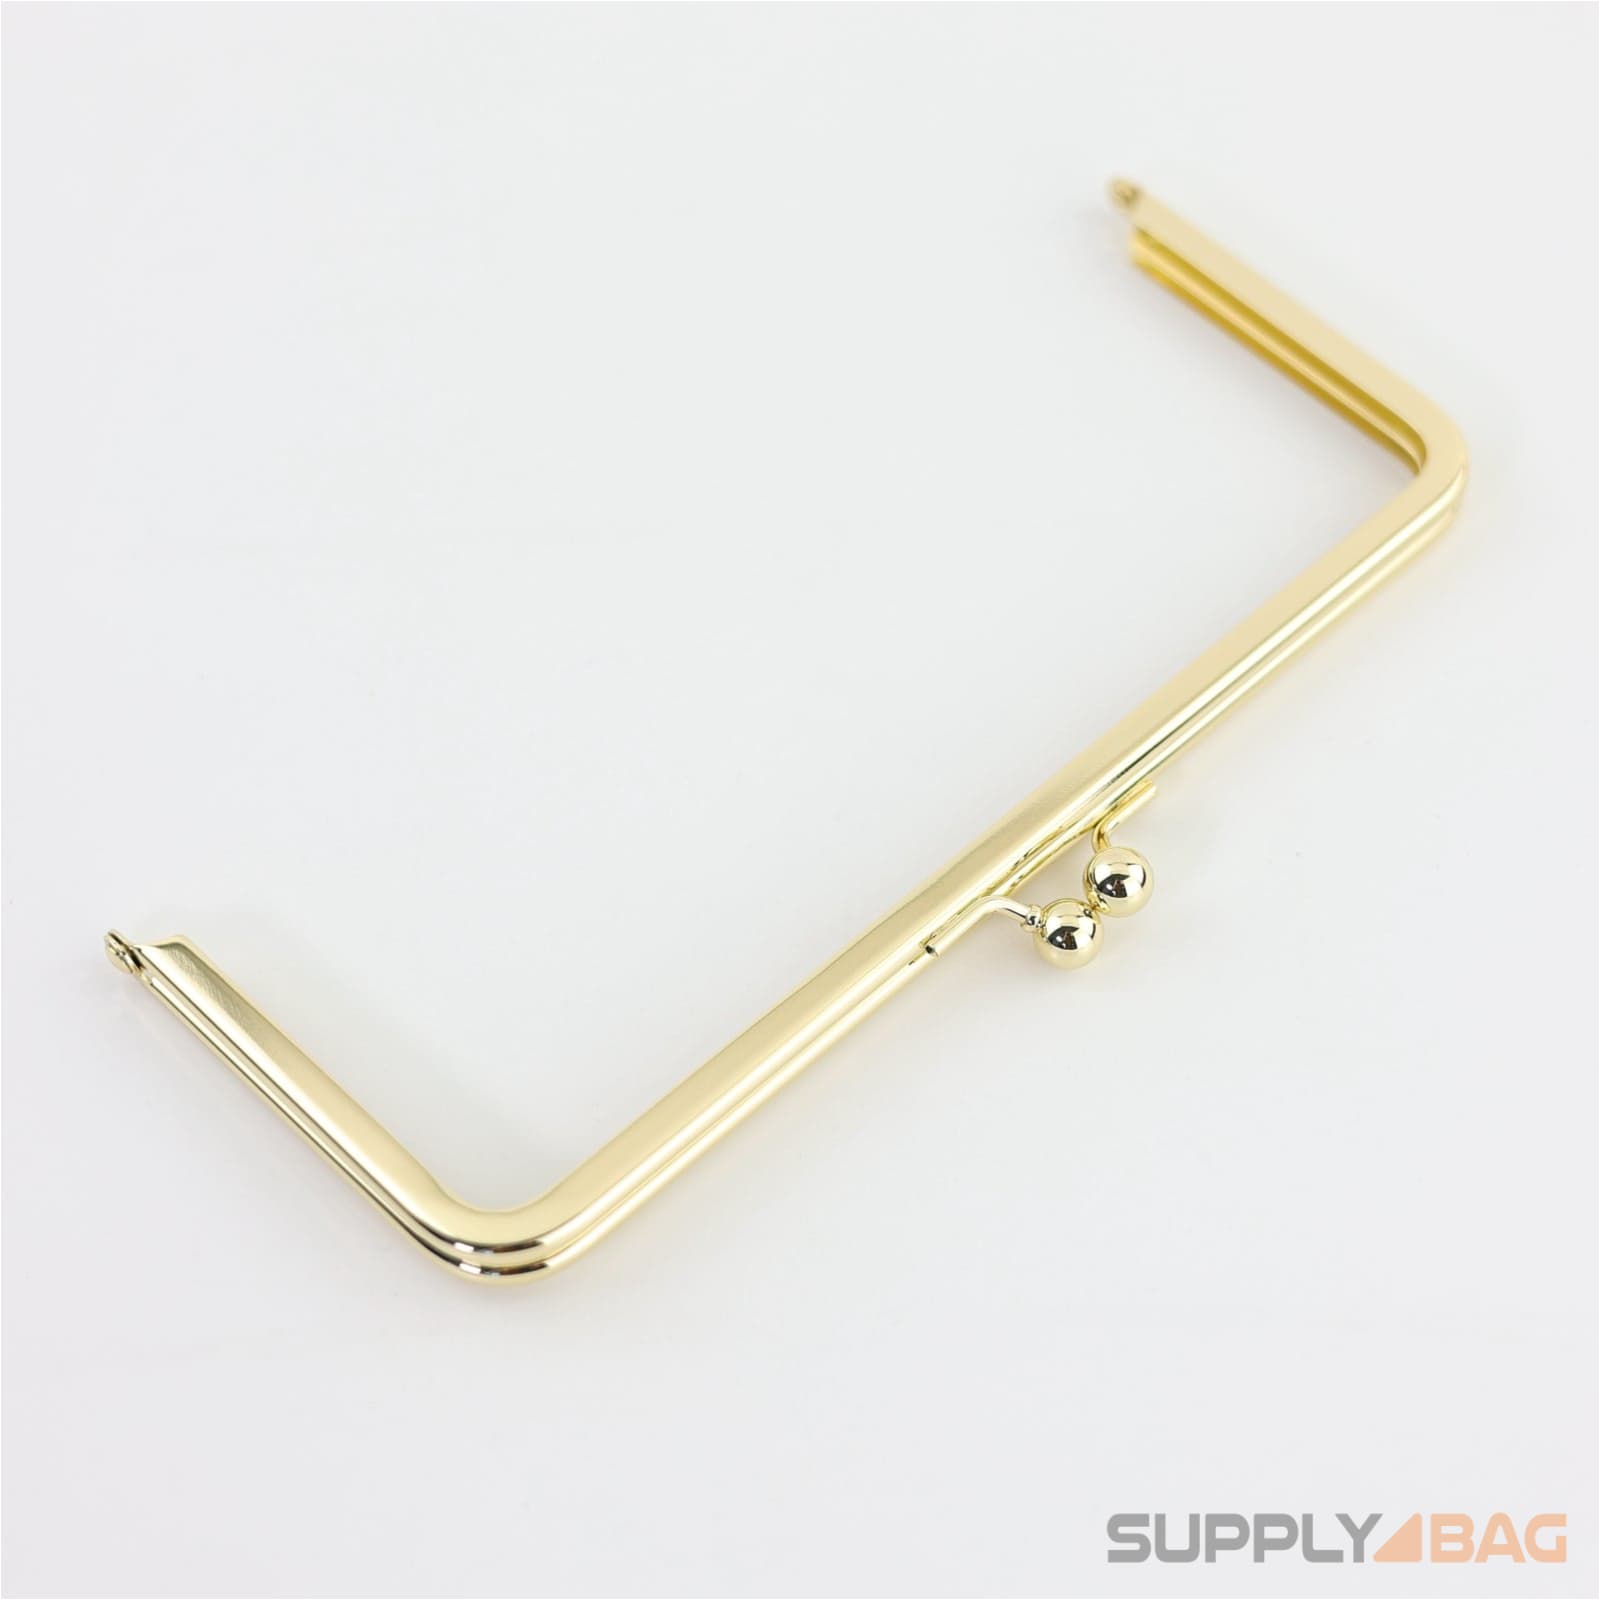 7 3/4 x 3 inch - kisslock clasp - gold metal purse frame